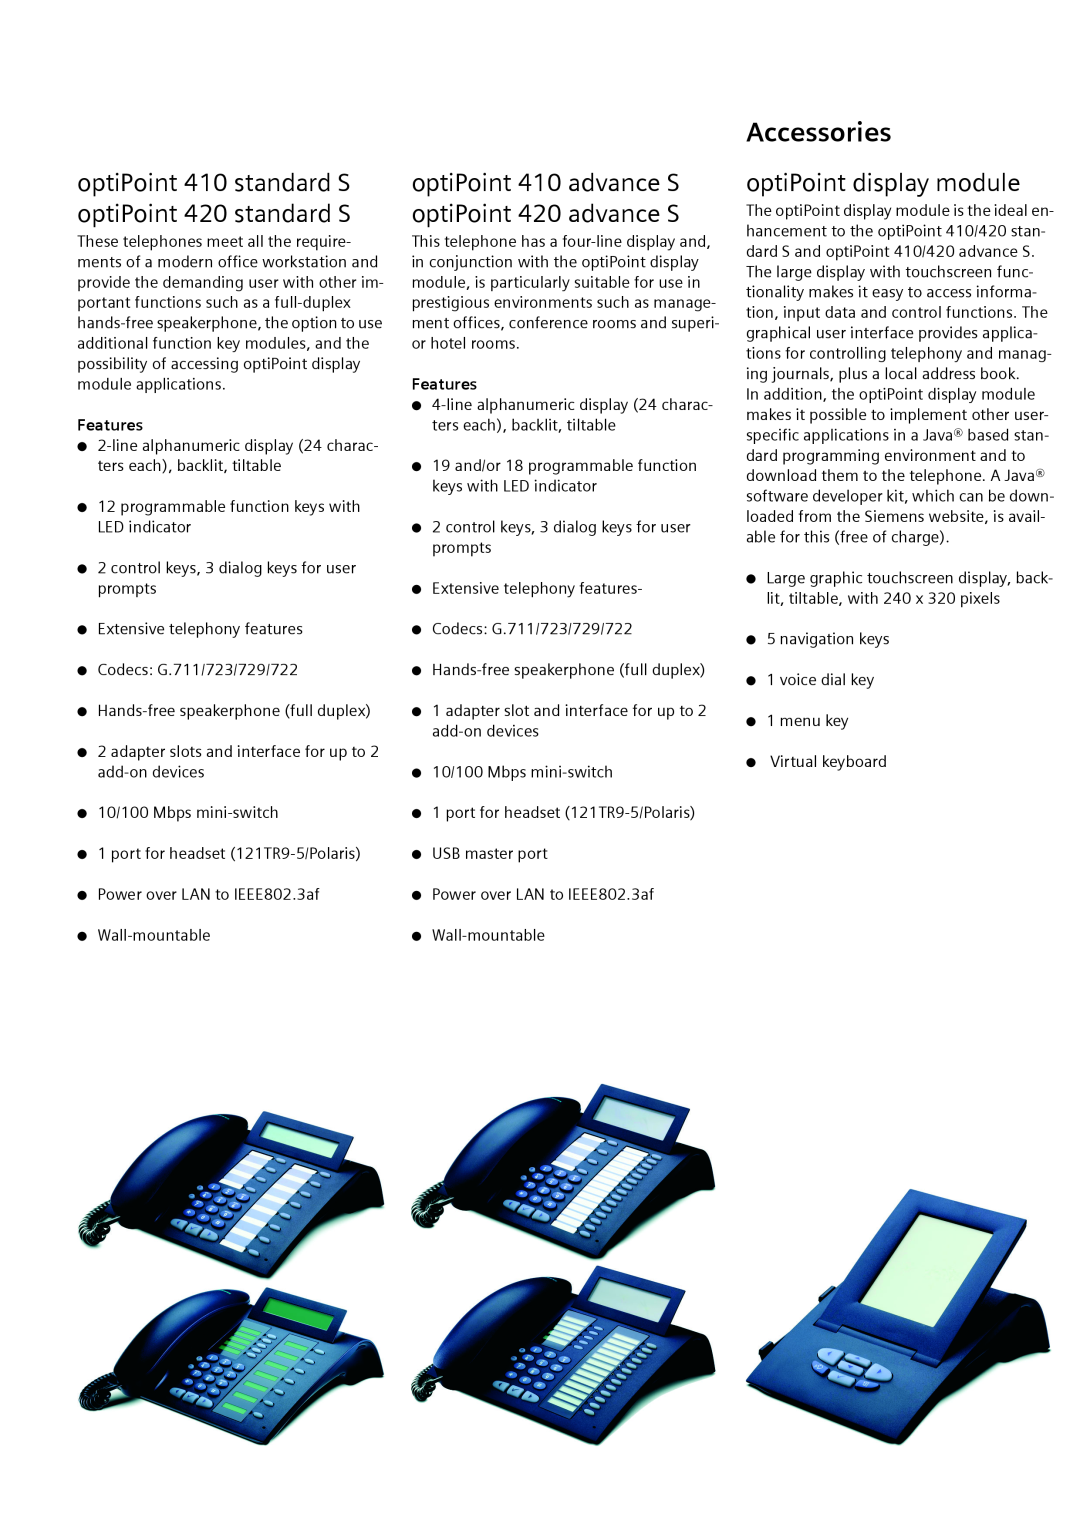 Siemens 410 S, 420 S Accessories, optiPoint display module, optiPoint 410 standard S optiPoint 420 standard S, Features 